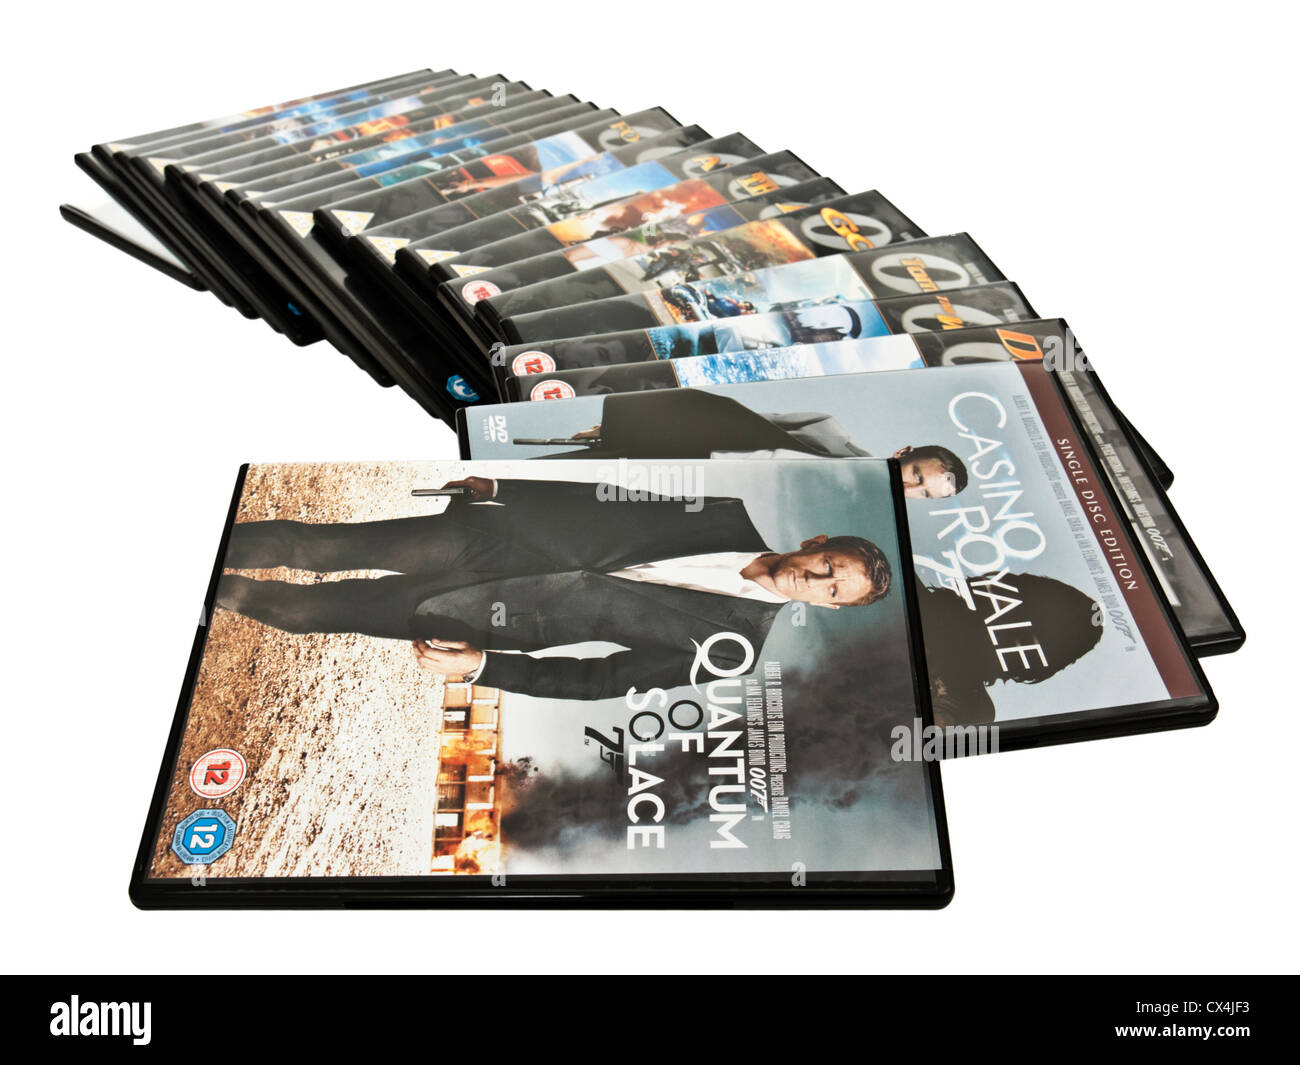 James Bond (007) Ultimate DVD Collector's Box Set Stock Photo - Alamy